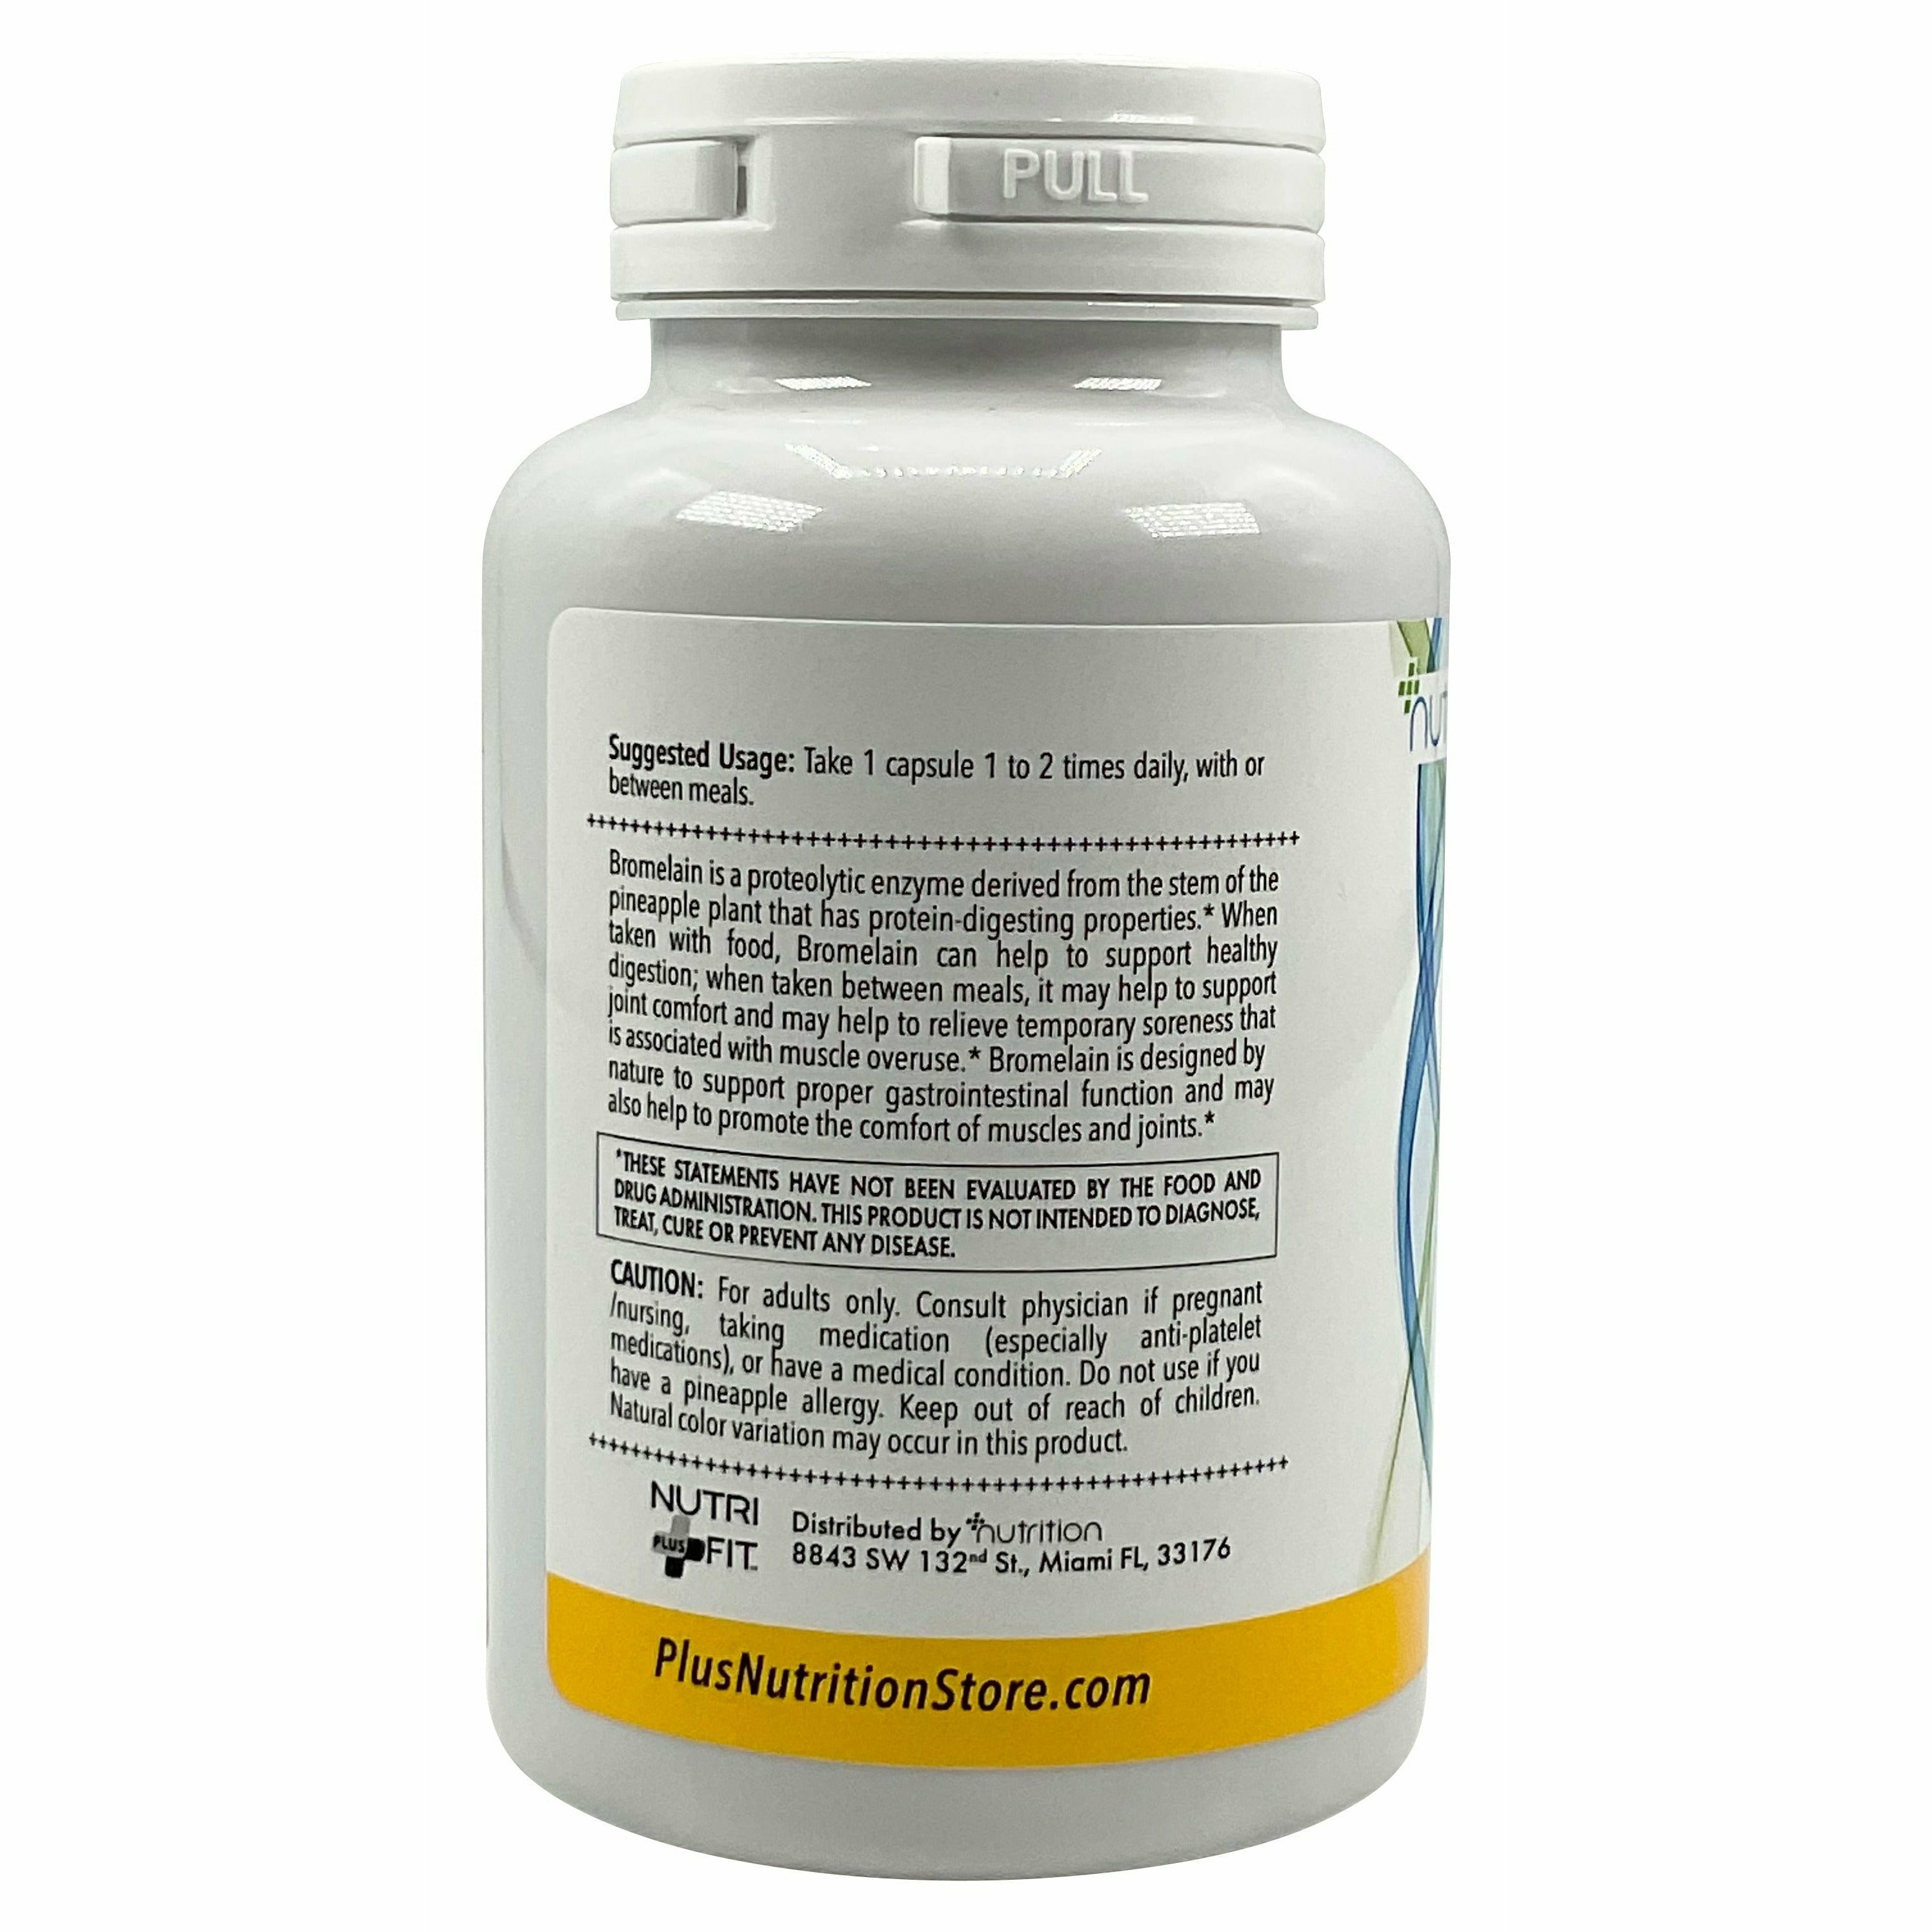 Nutri Plus Fit Bromelain 500 mg, 120 Veg Capsules - Natural Pineapple, Proteolytic Enzyme Supplement, 2400 GDU